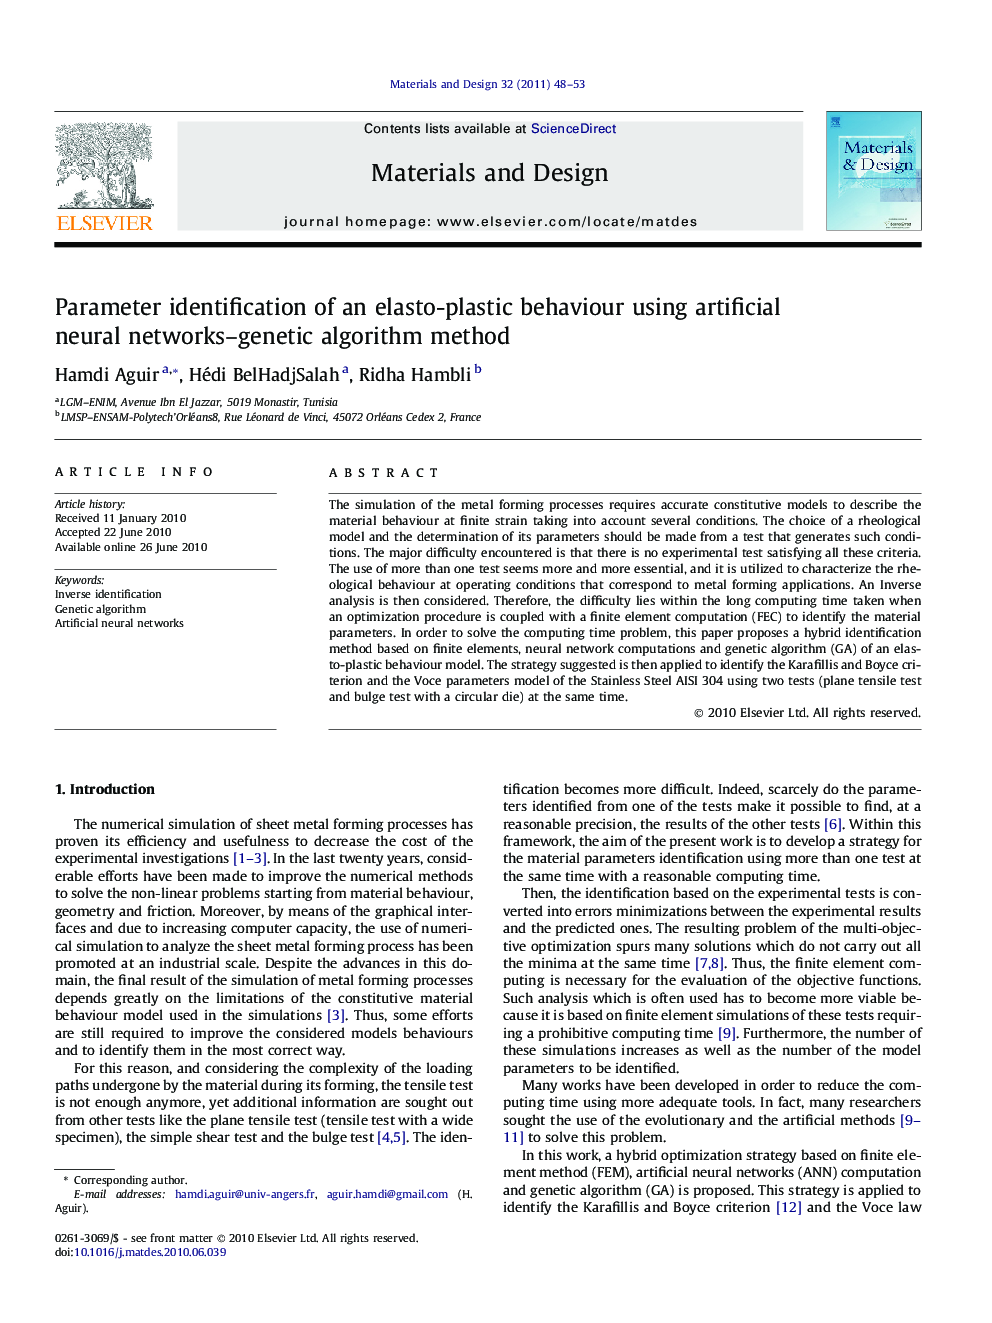 Parameter identification of an elasto-plastic behaviour using artificial neural networks–genetic algorithm method